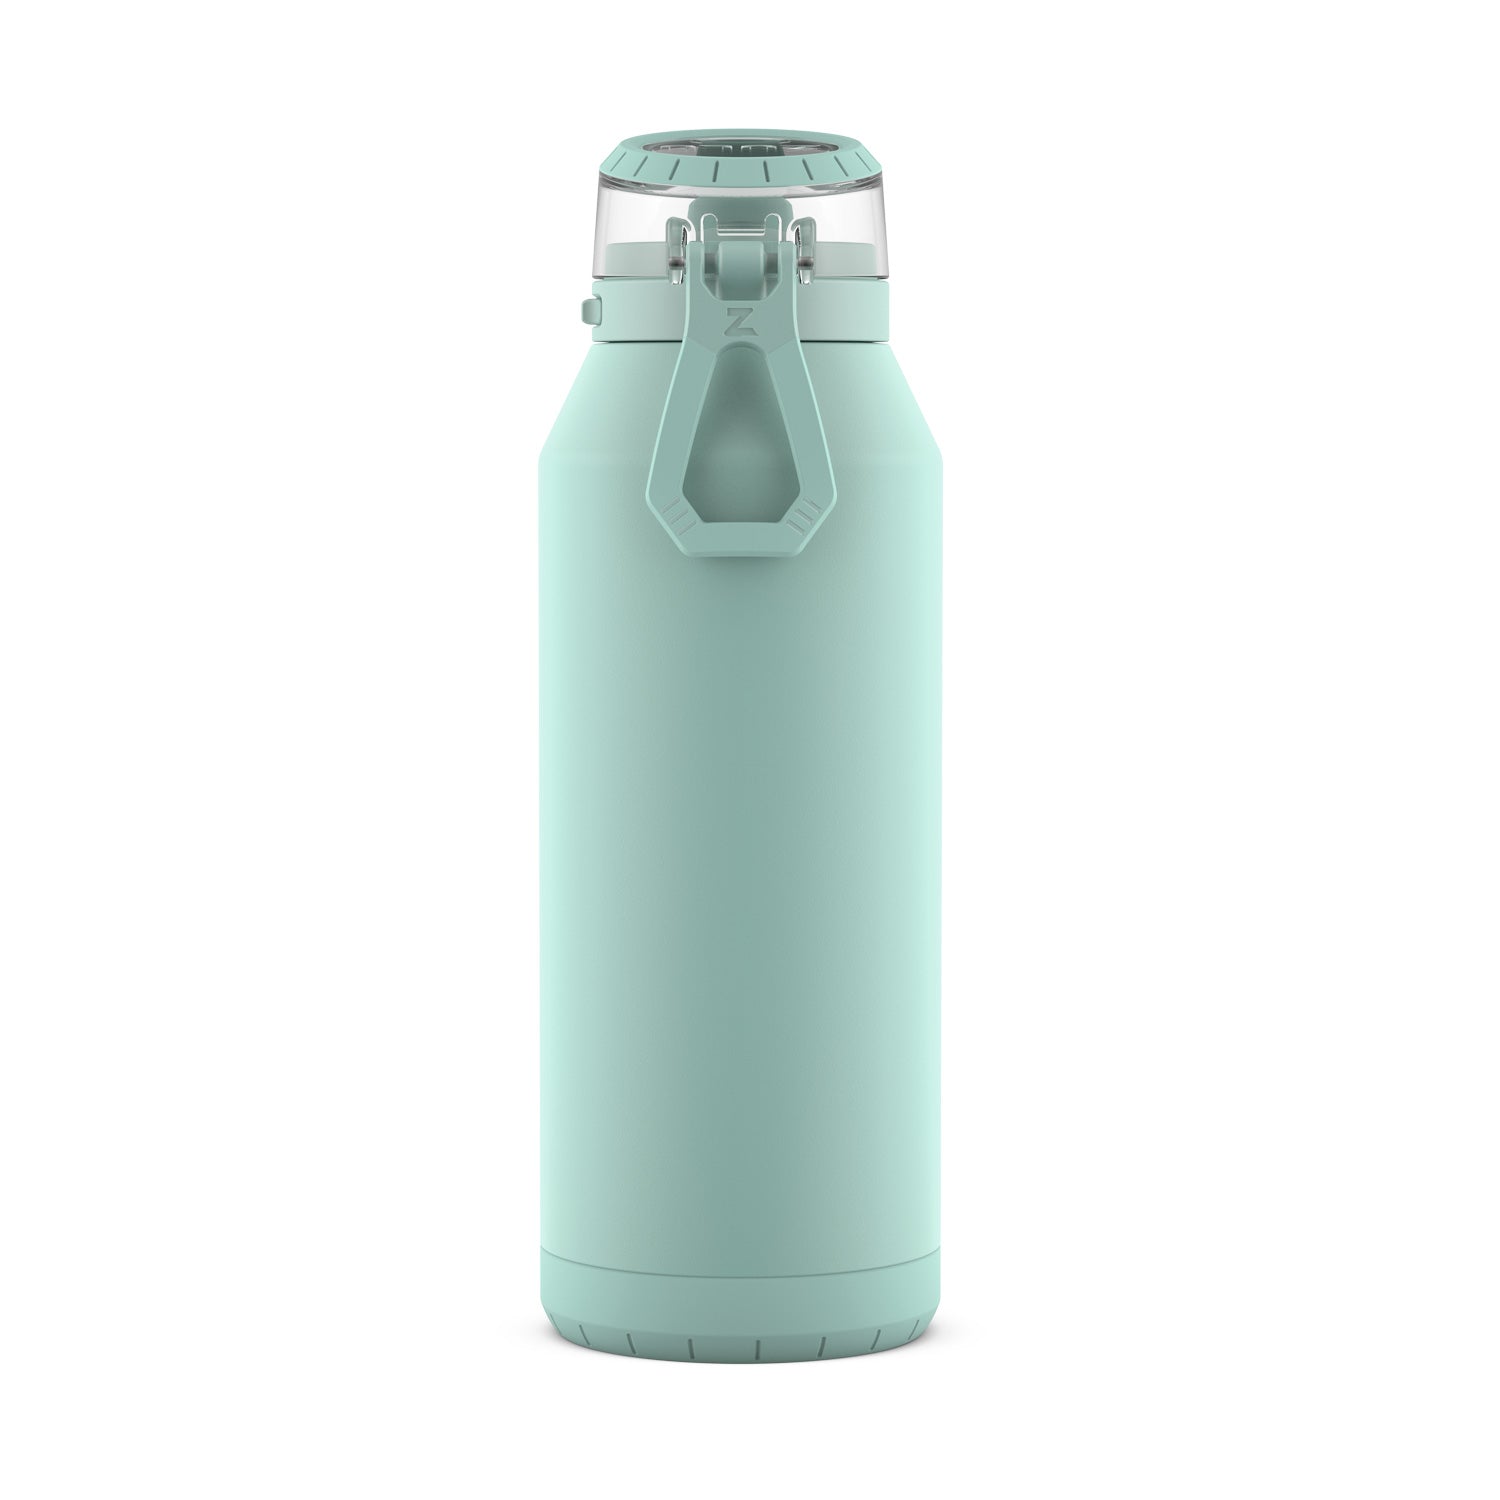 Brita Stainless Steel Water Filter Bottle 32 oz